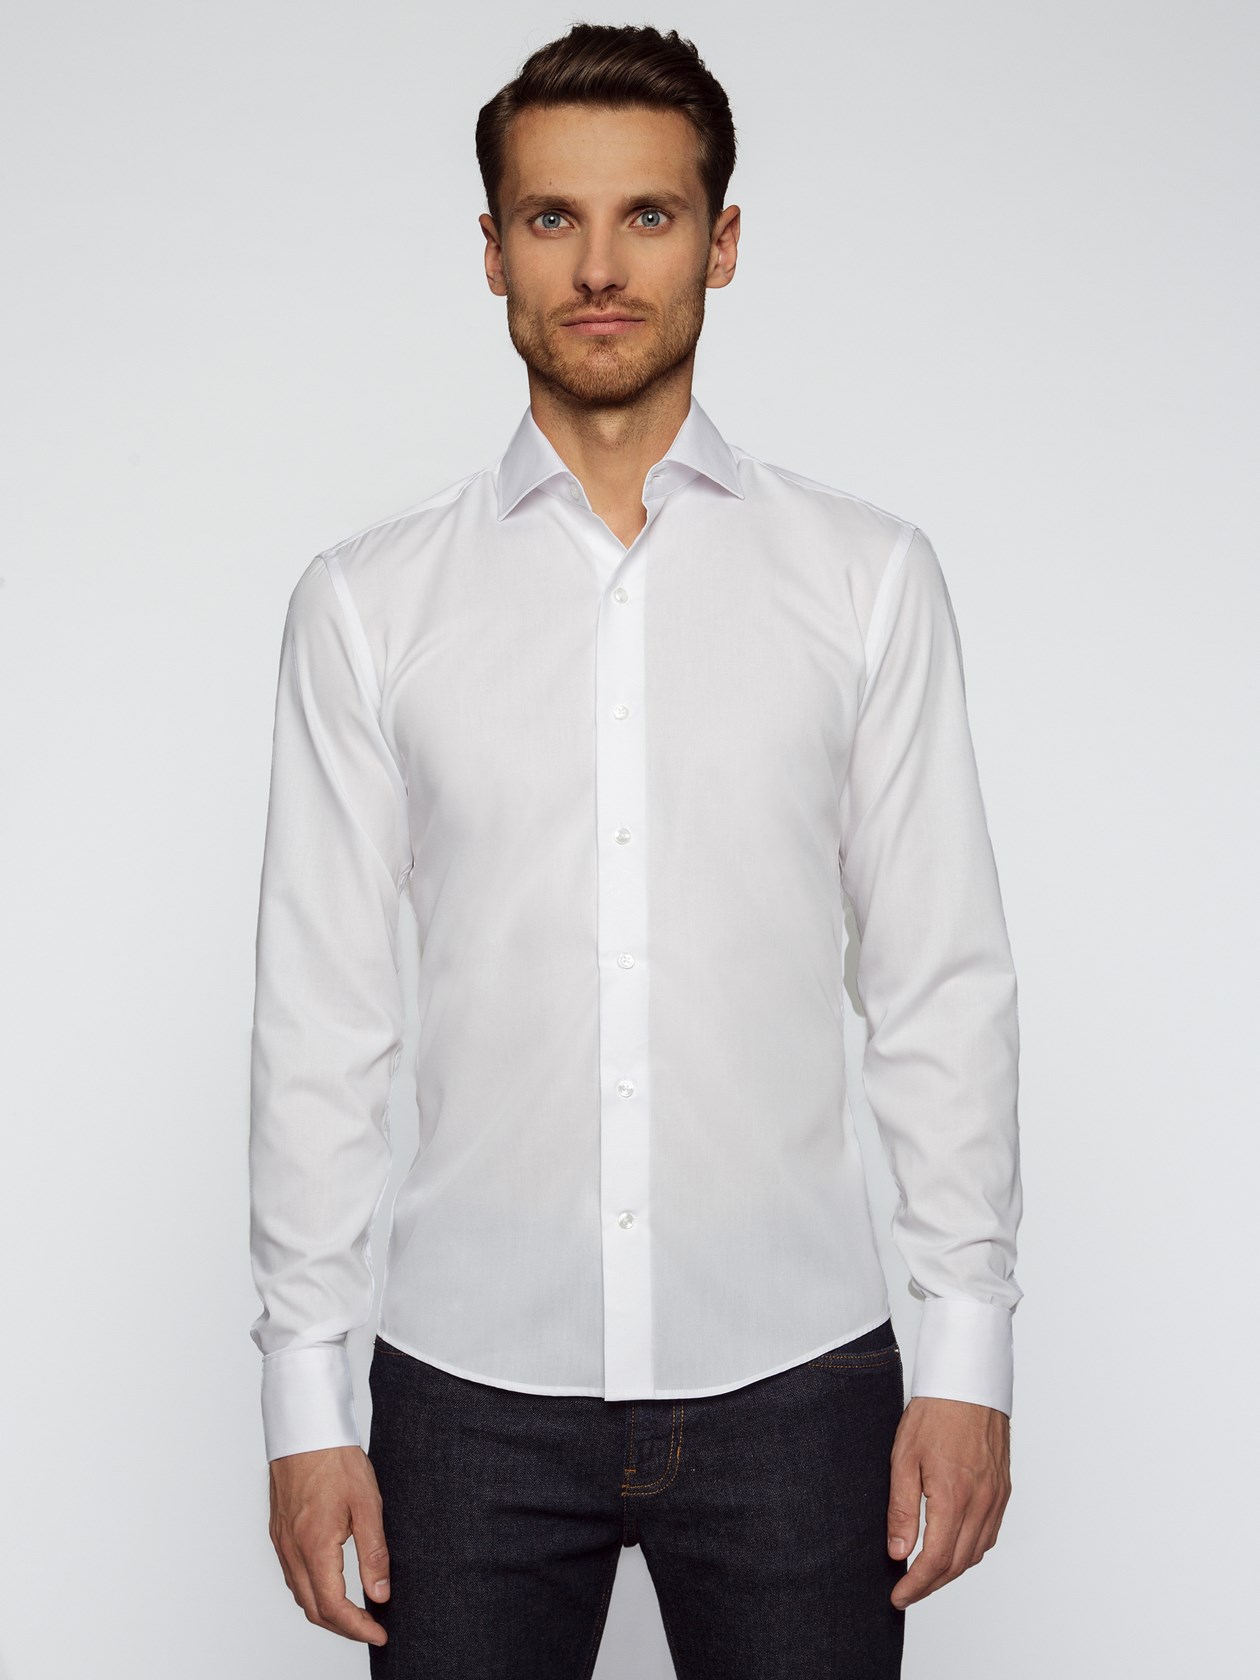 Pima Cotton- White, Plain Weave Shirt